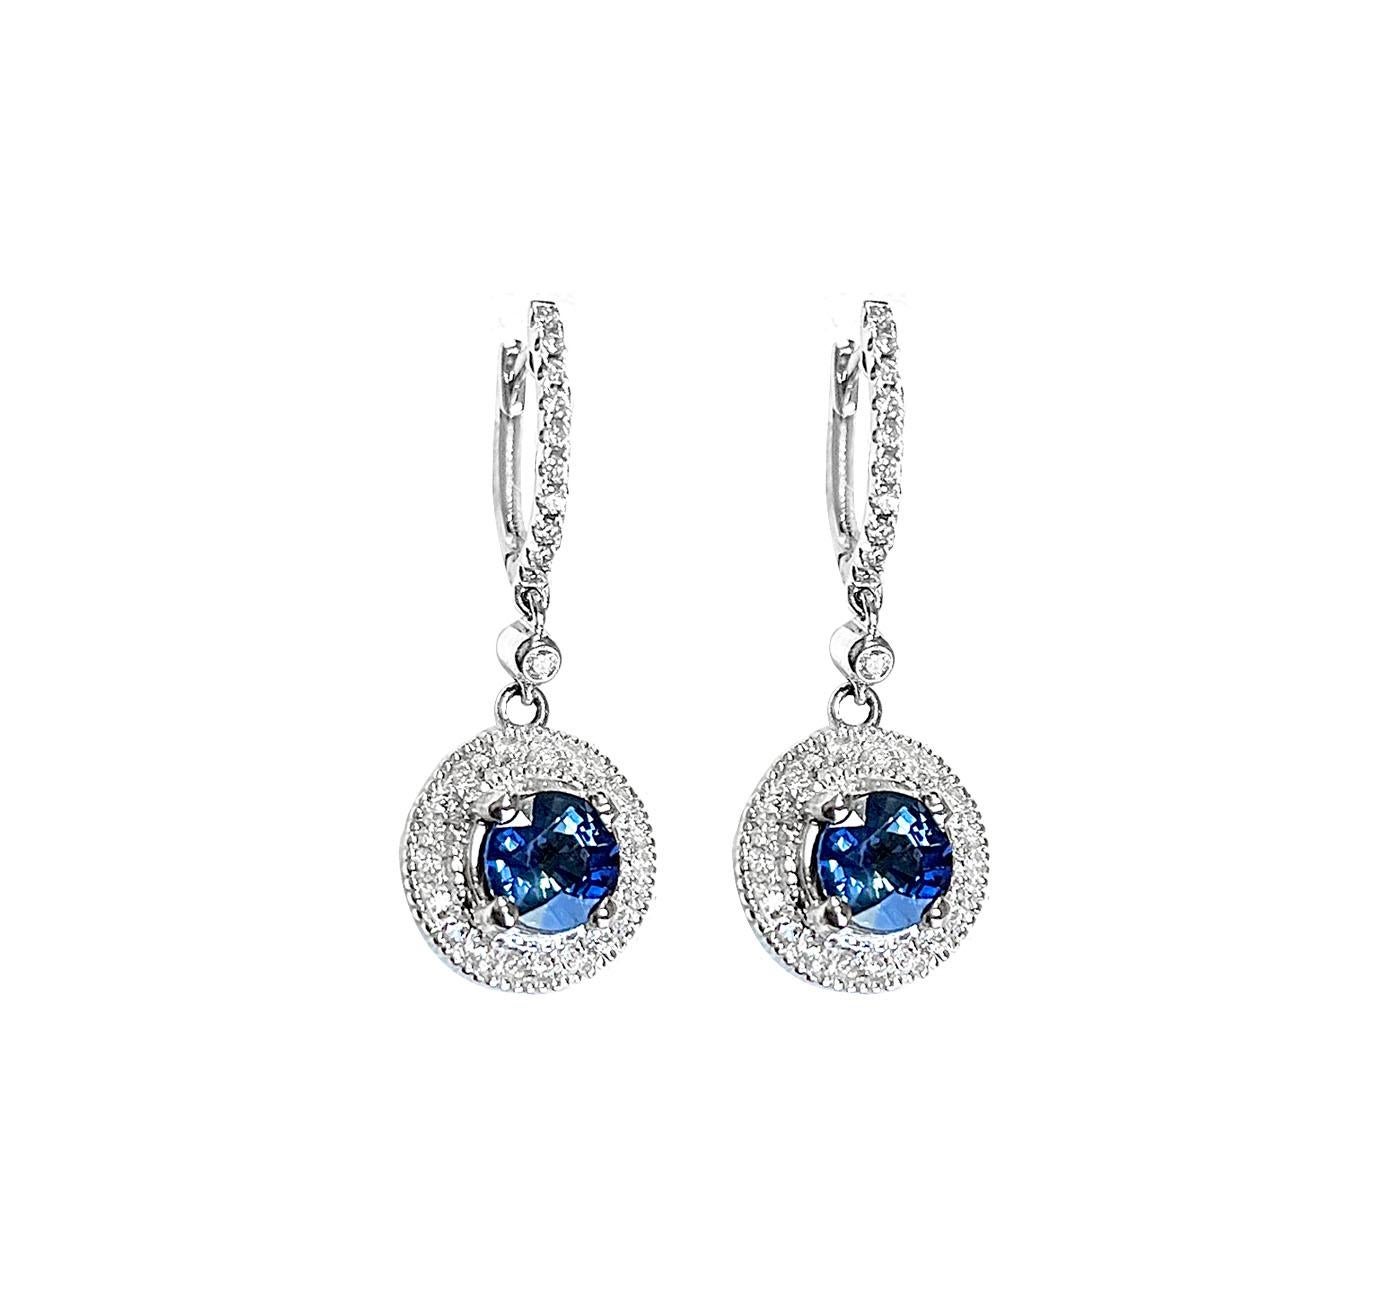 Vitolo 18 Karat Gold Diamond Drop Earrings with Blue Sapphire For Sale 2